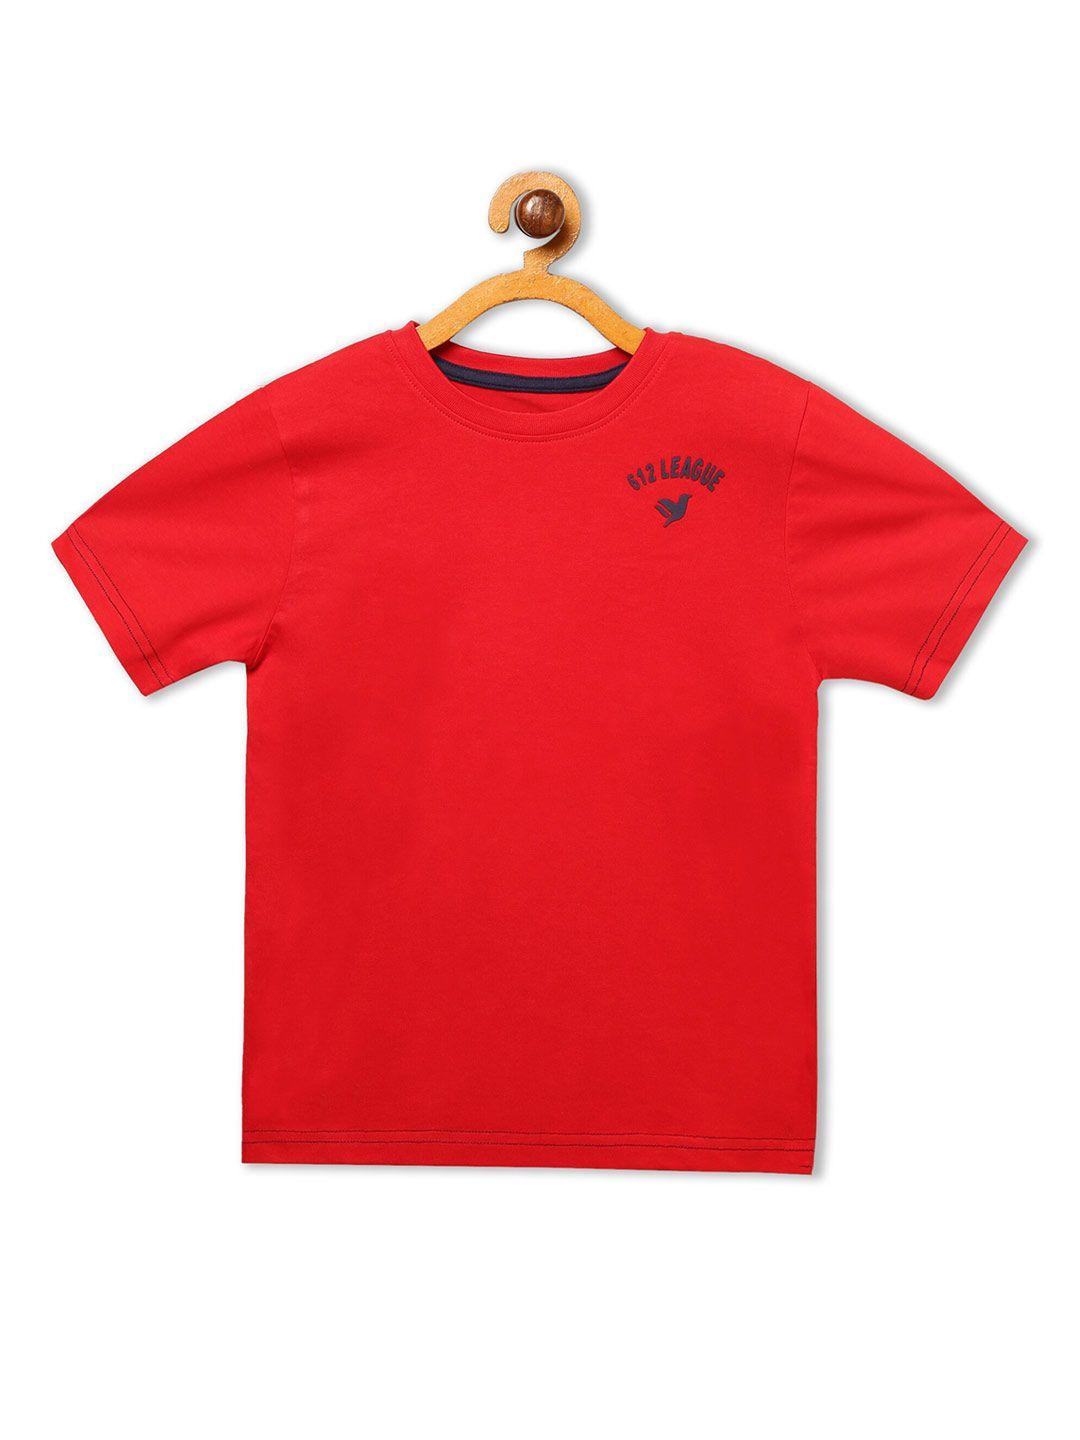 612league boys round neck short sleeves cotton t-shirt